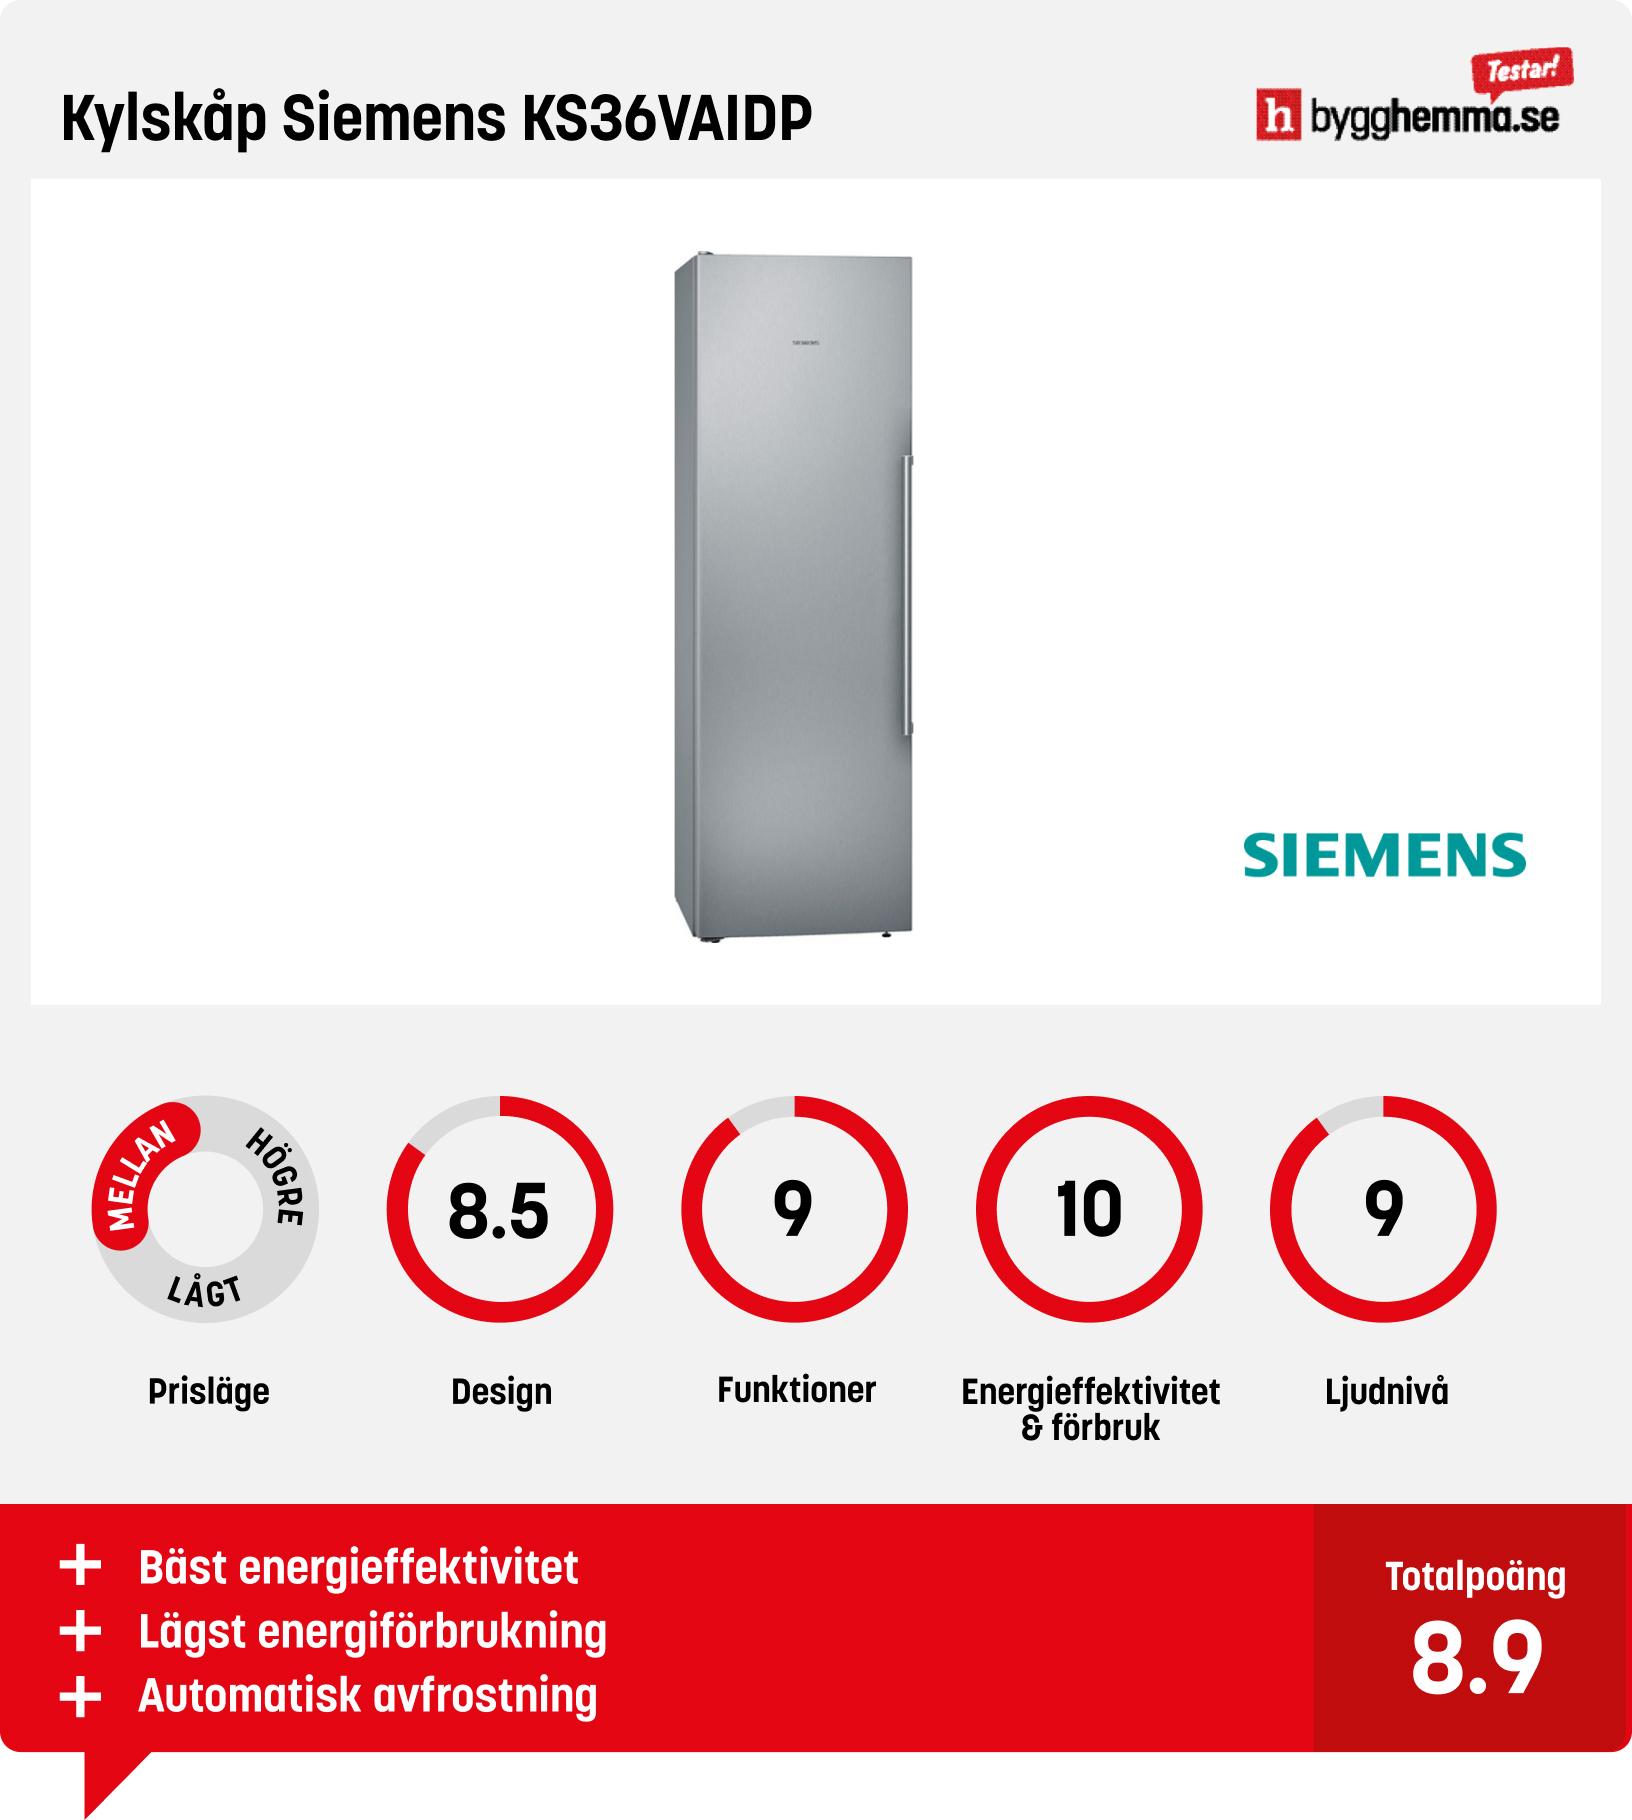 Kylskåp bäst i test - Kylskåp Siemens KS36VAIDP